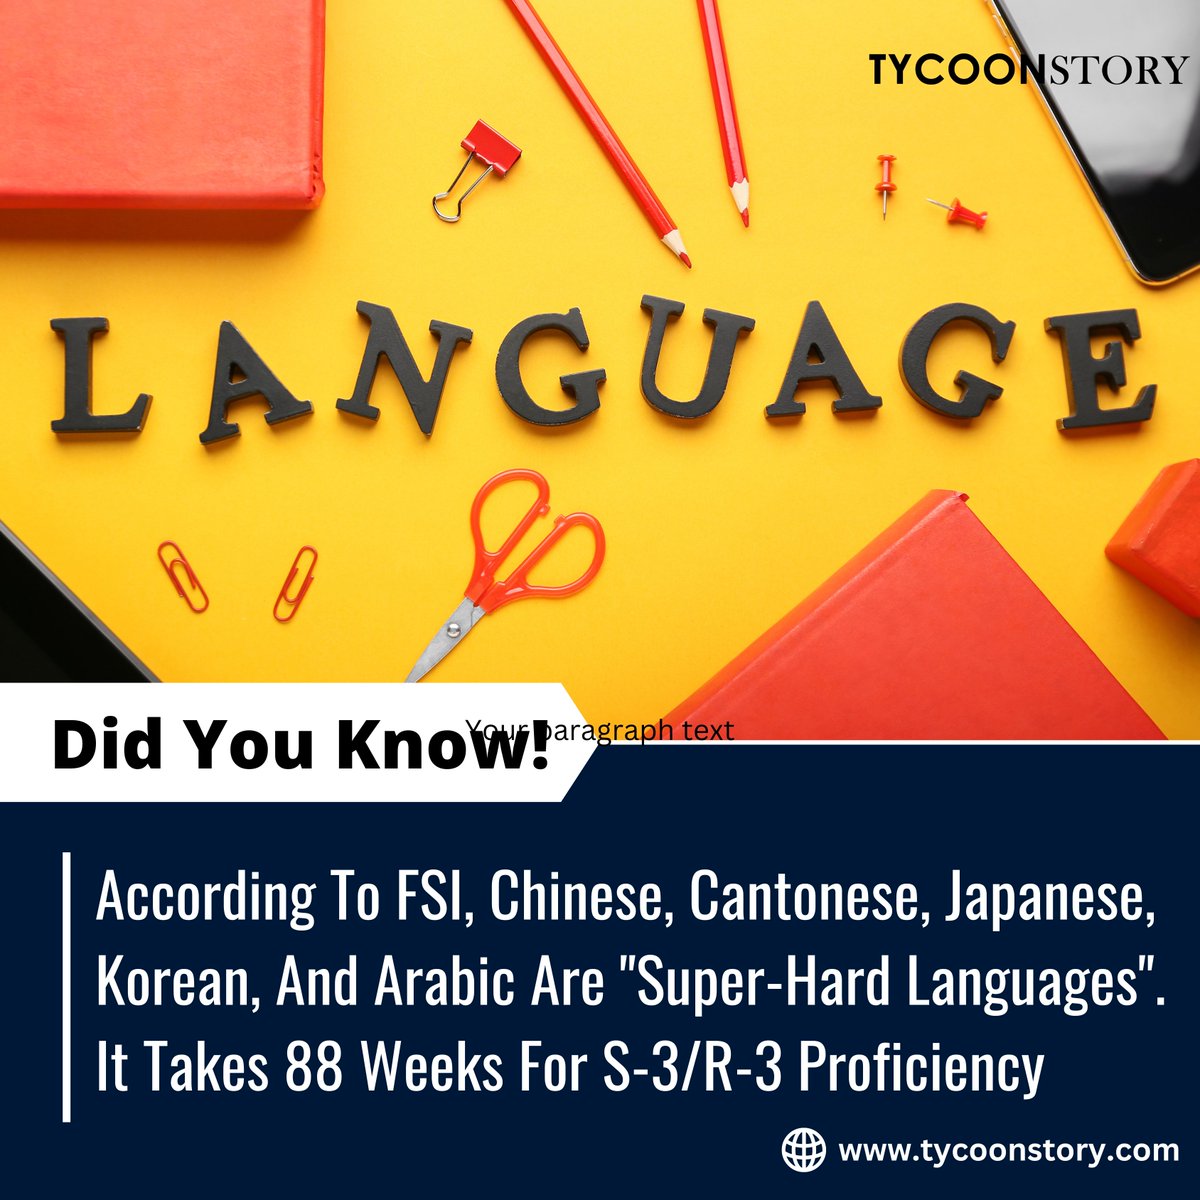 #DidYouKnow

#LanguageLearning #LanguageProficiency #superhard #cantonese #japaneseart #koreanstyle #arabic #foreignlanguage #fslresearch #LanguageSkills #proficiencygoals #LanguageFluency